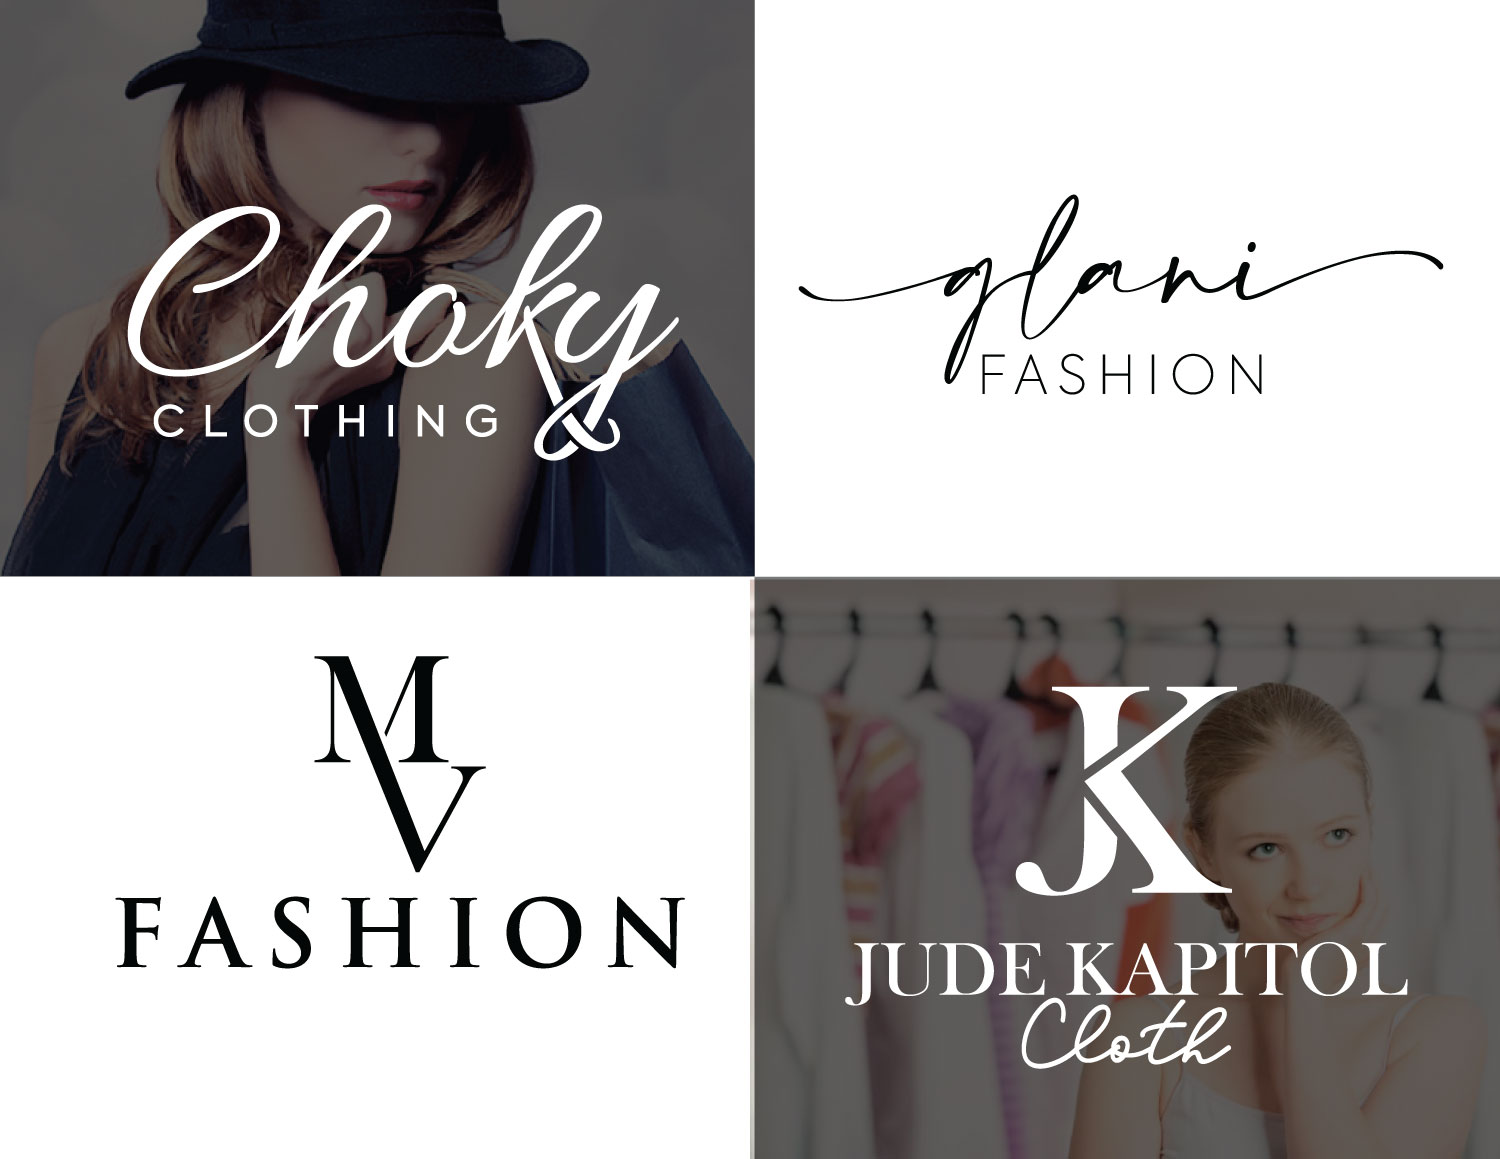 fashion designer logo images